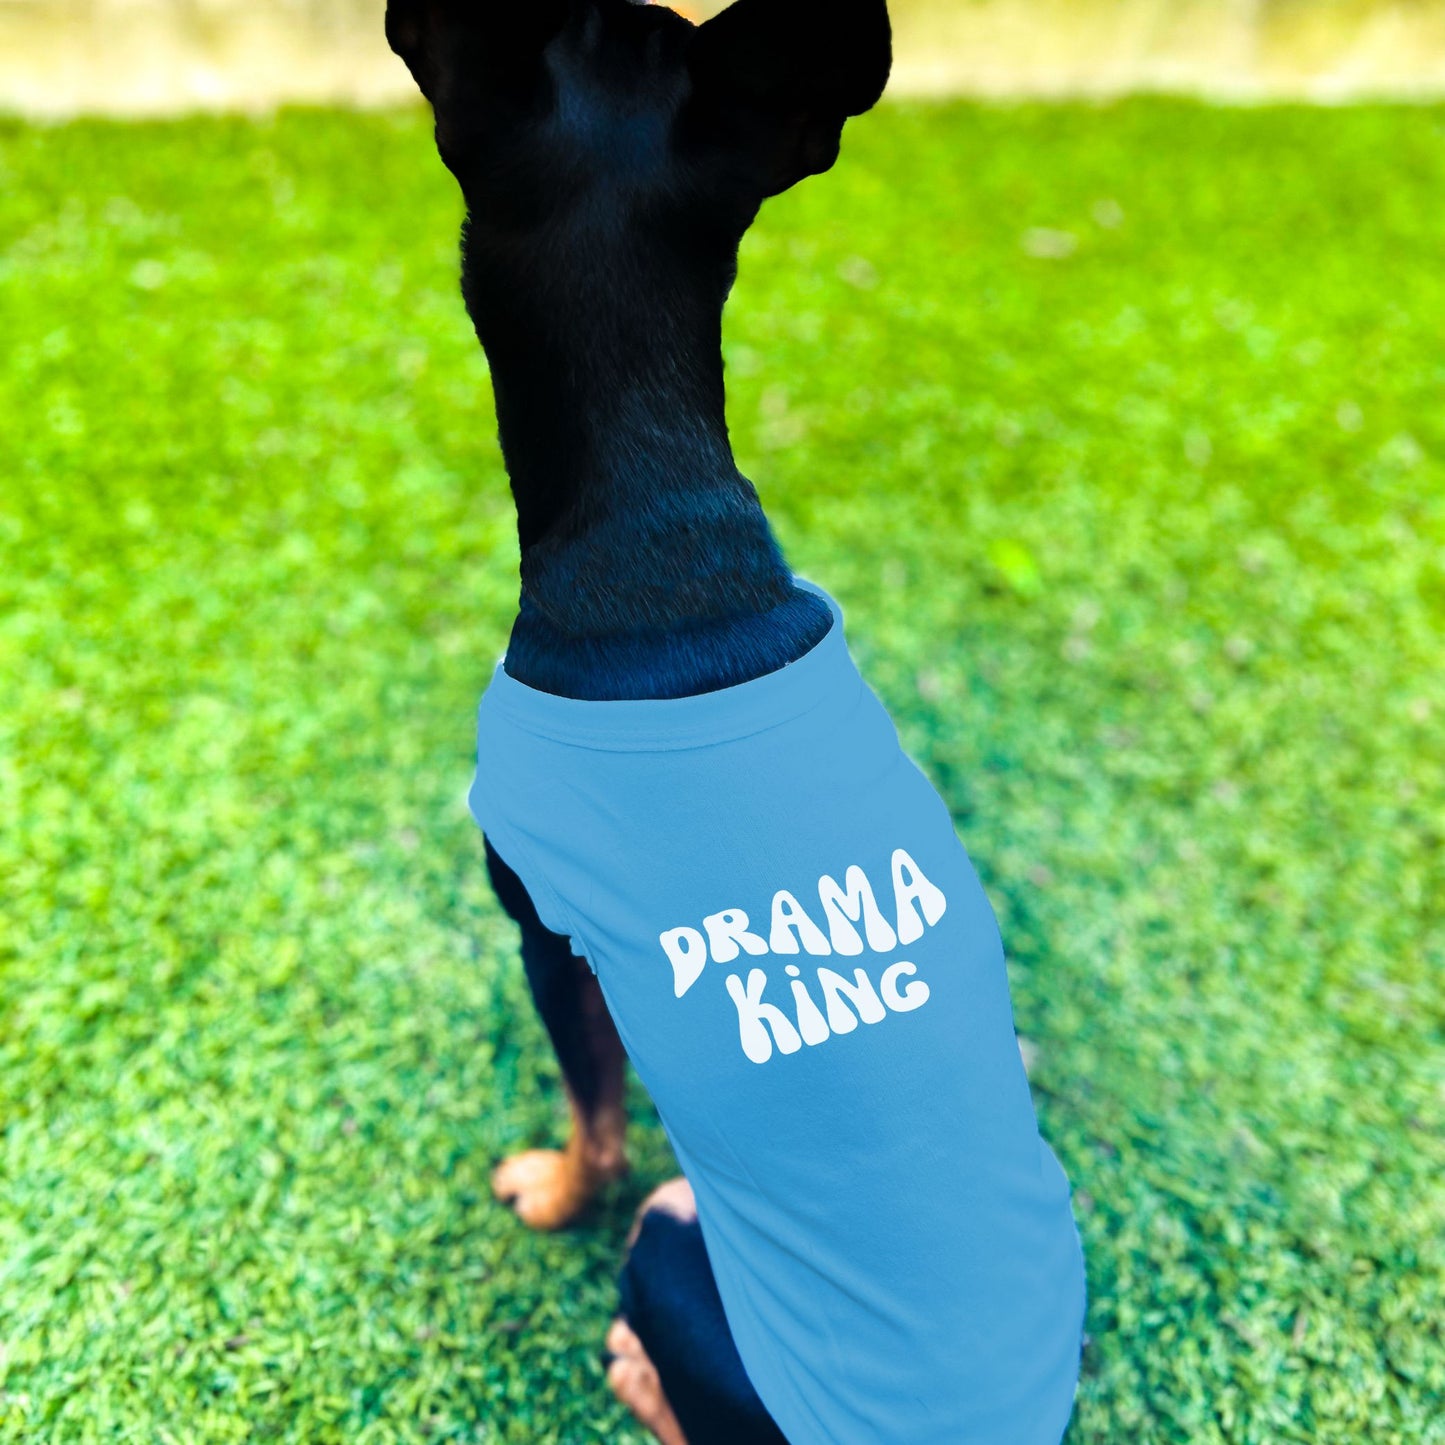 "Drama King" Retro Wave Dog Shirt